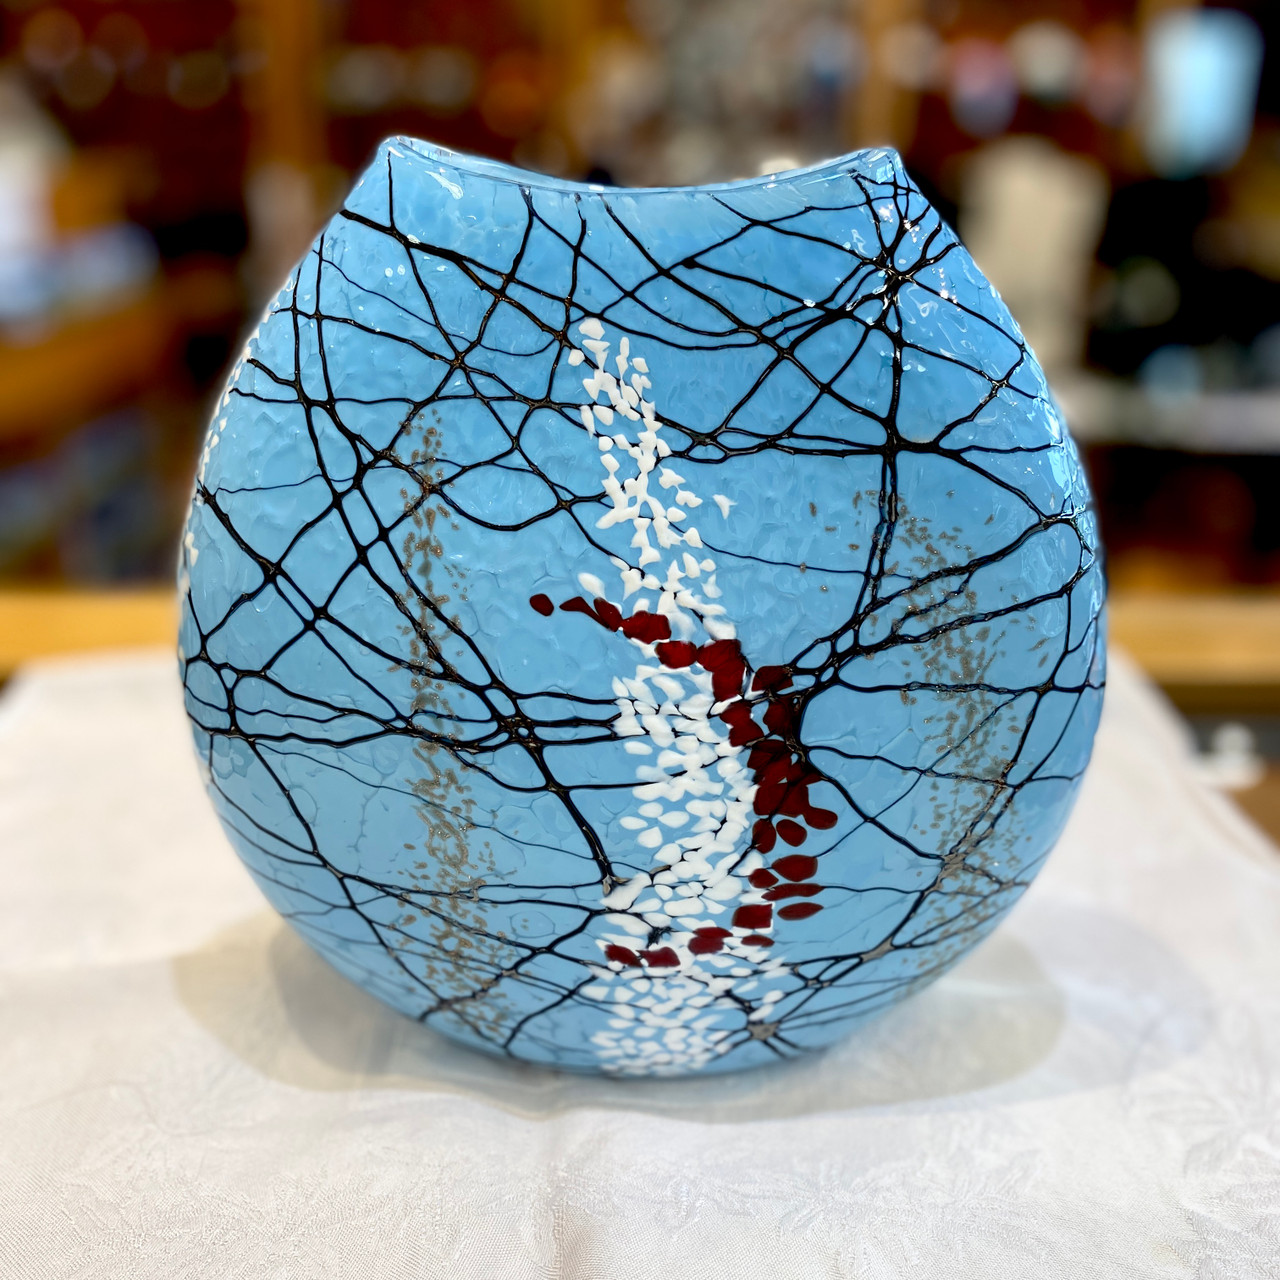 Vines Art Glass Heart Ornaments